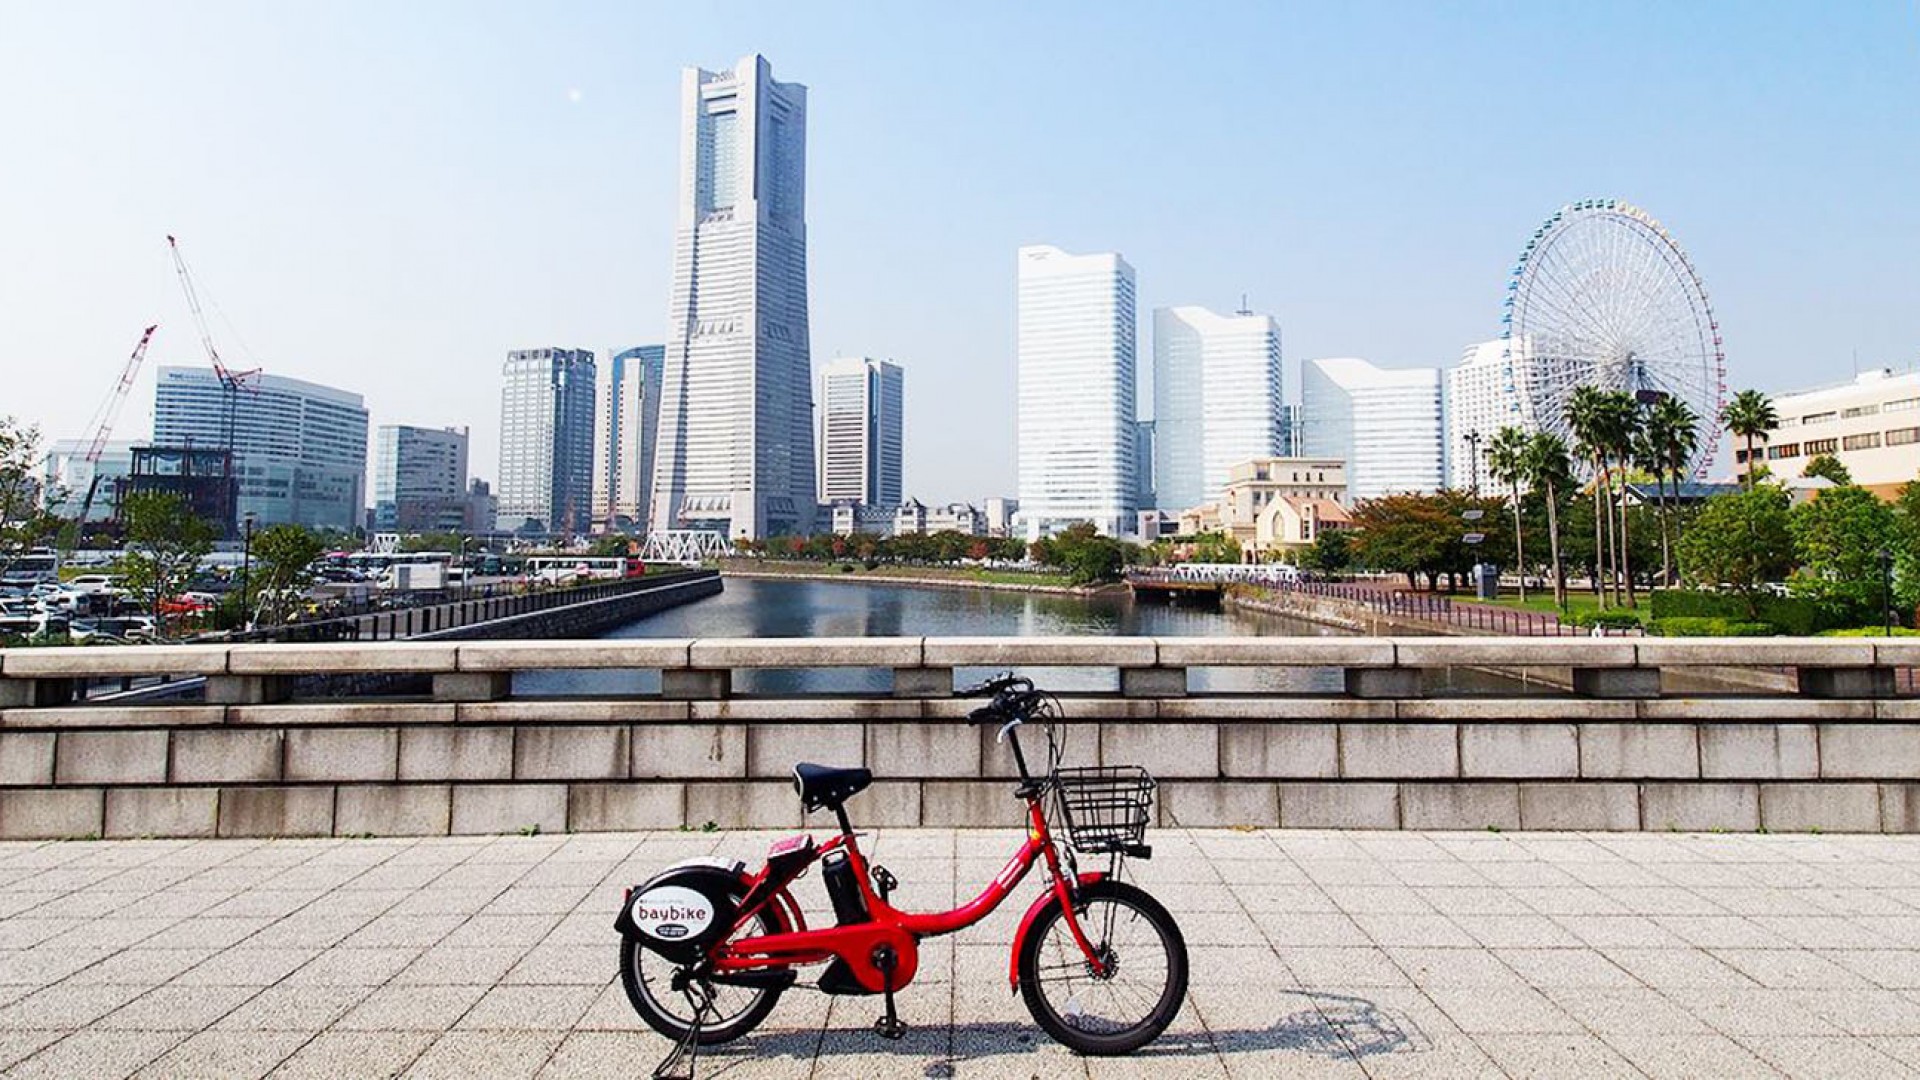 Sightseeing in Yokohama by Baybike (electric bicycle)